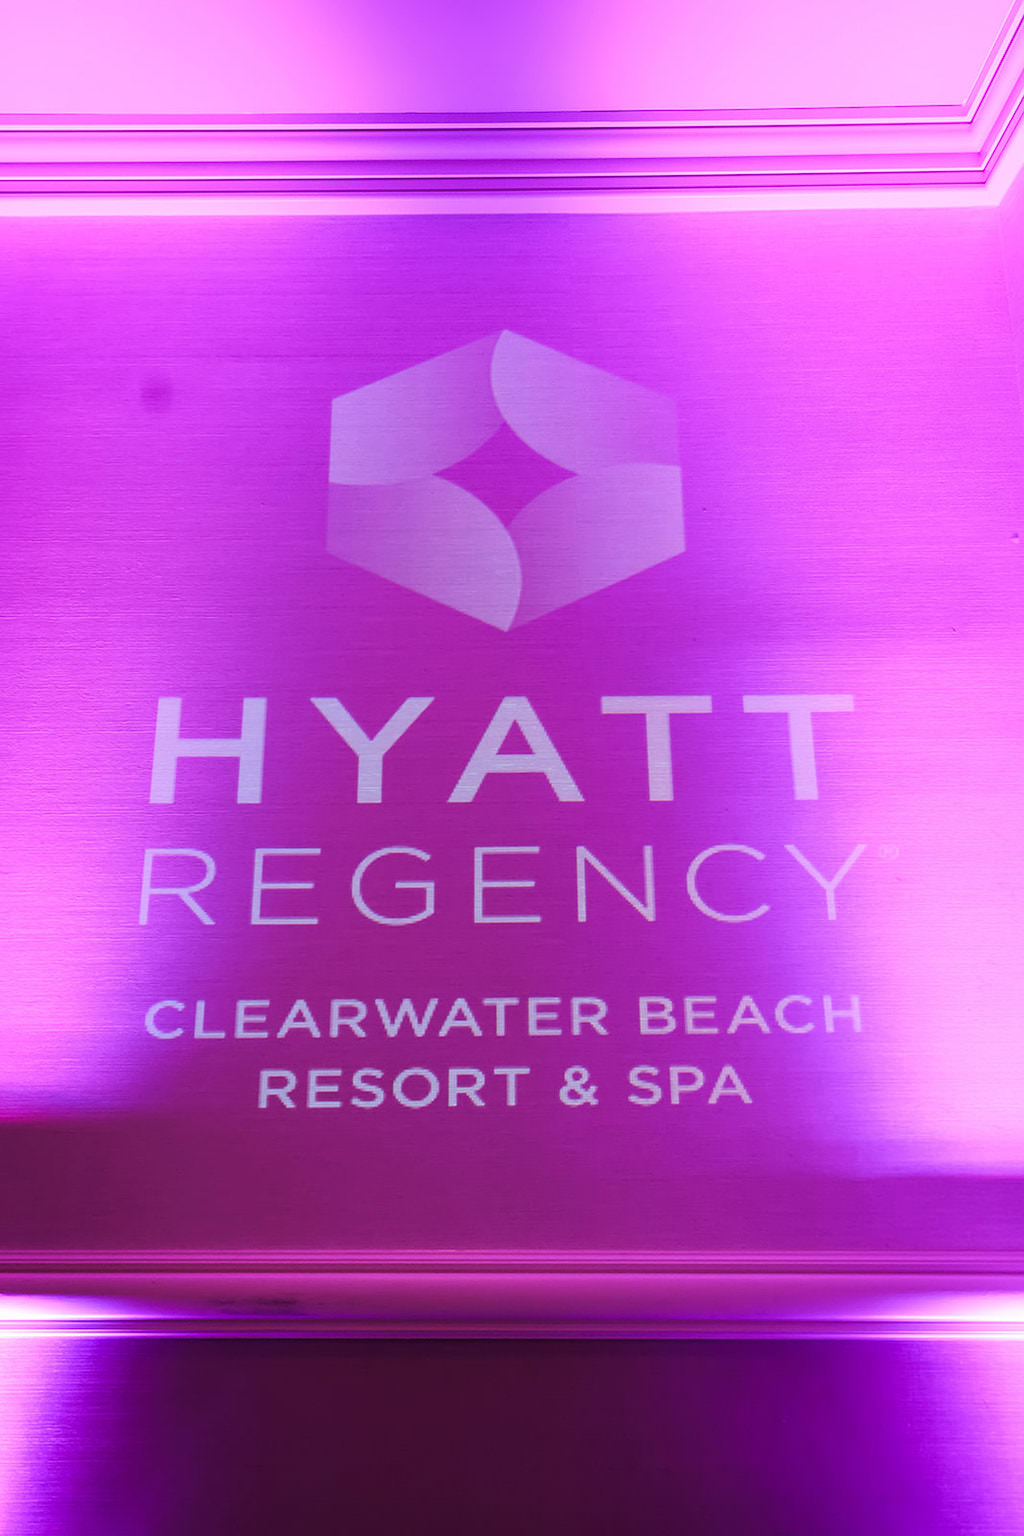 Wedding Venue Hyatt Regency Clearwater Beach